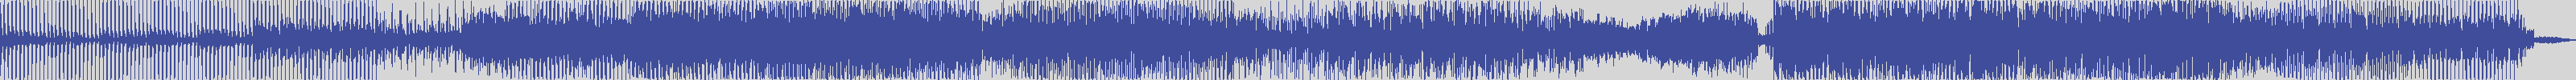 atomic_recordings [AR020] Ivan Pugliares, Reezar - Mitova [Original Mix] audio wave form